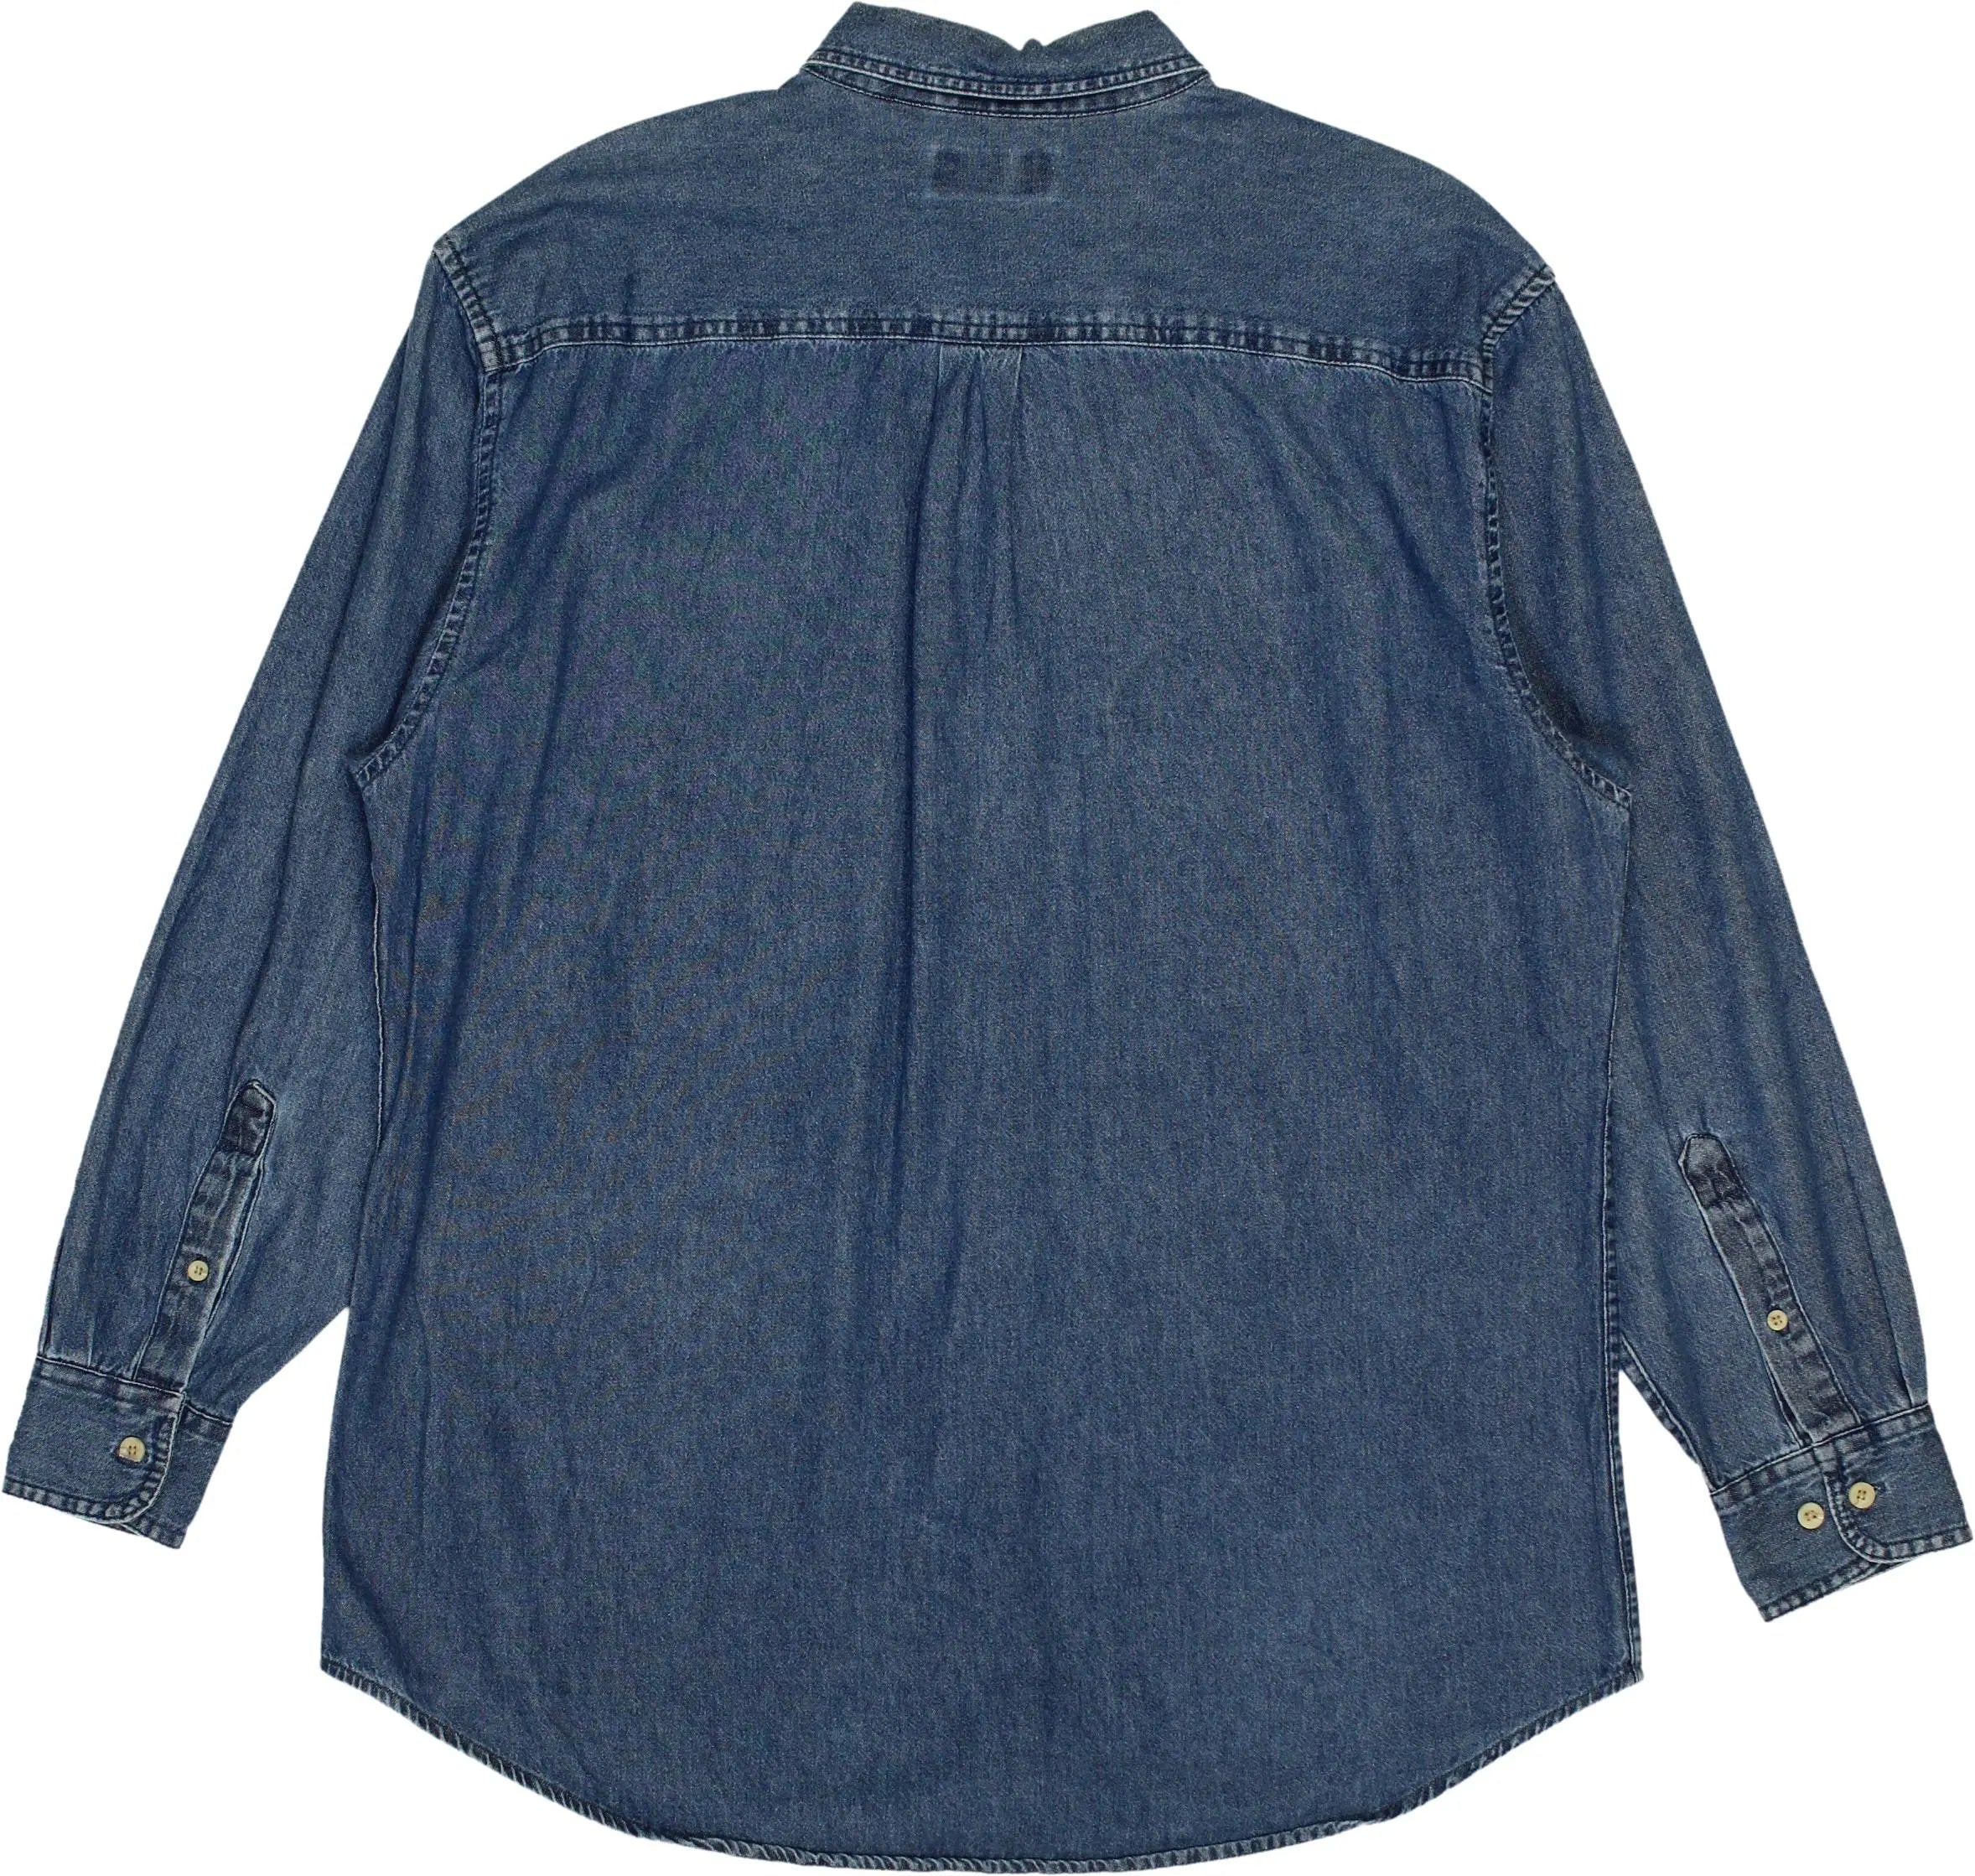 Cintas - Denim Shirt- ThriftTale.com - Vintage and second handclothing